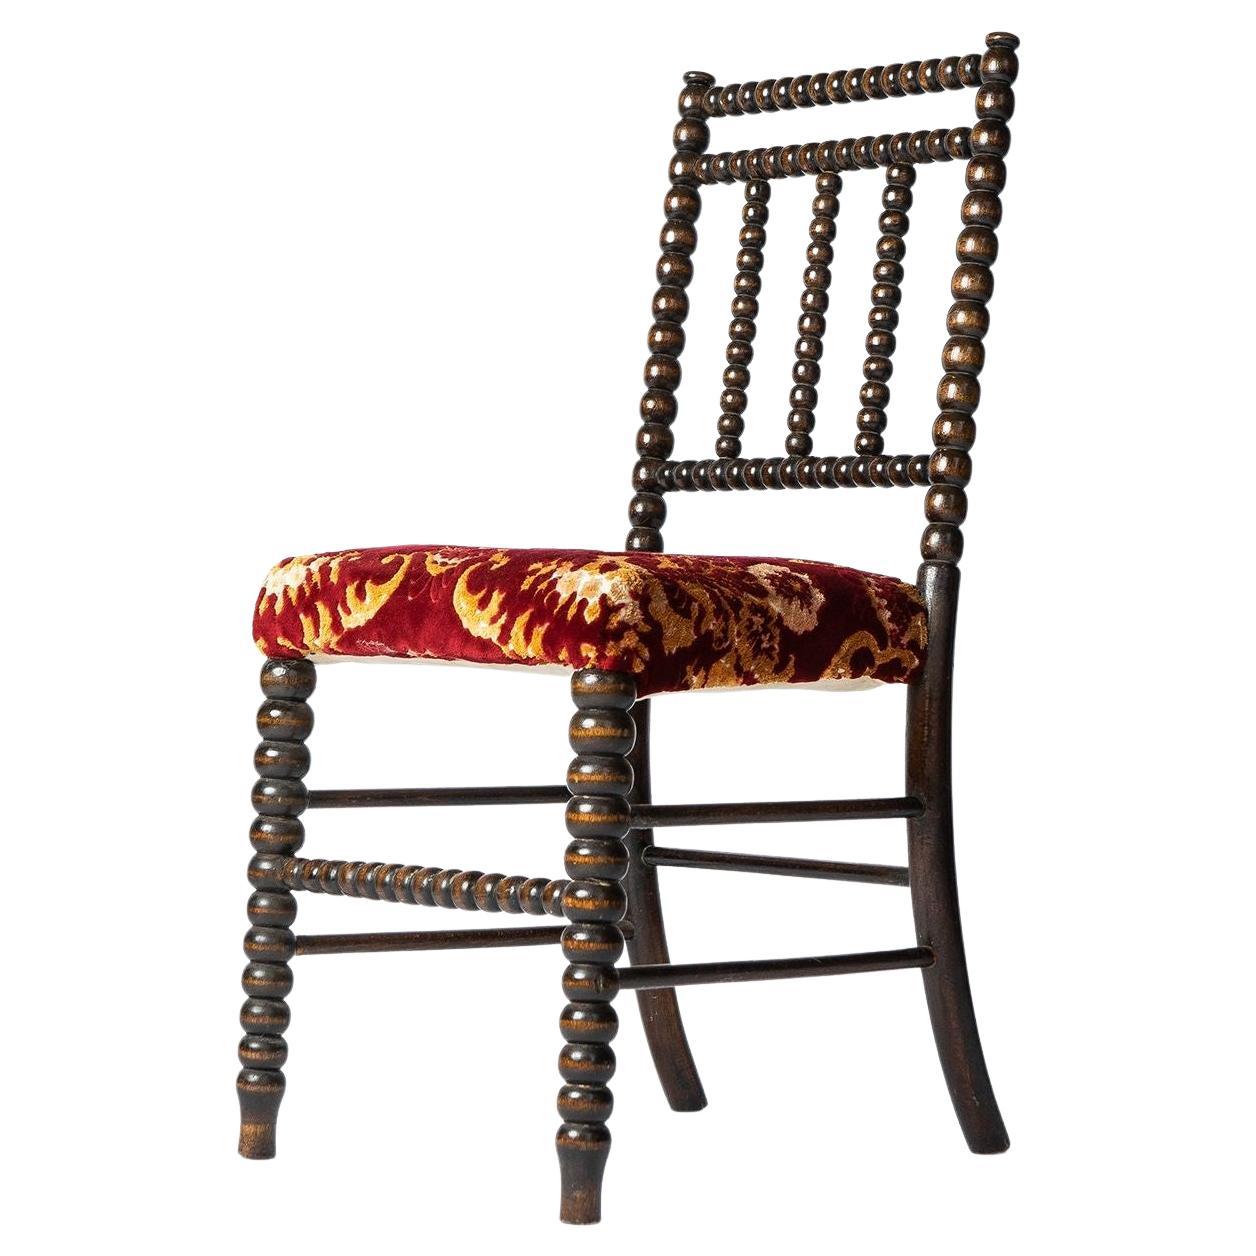 Antique Bobbin Turned Chair with Red Velvet Upholstery, 19th Century